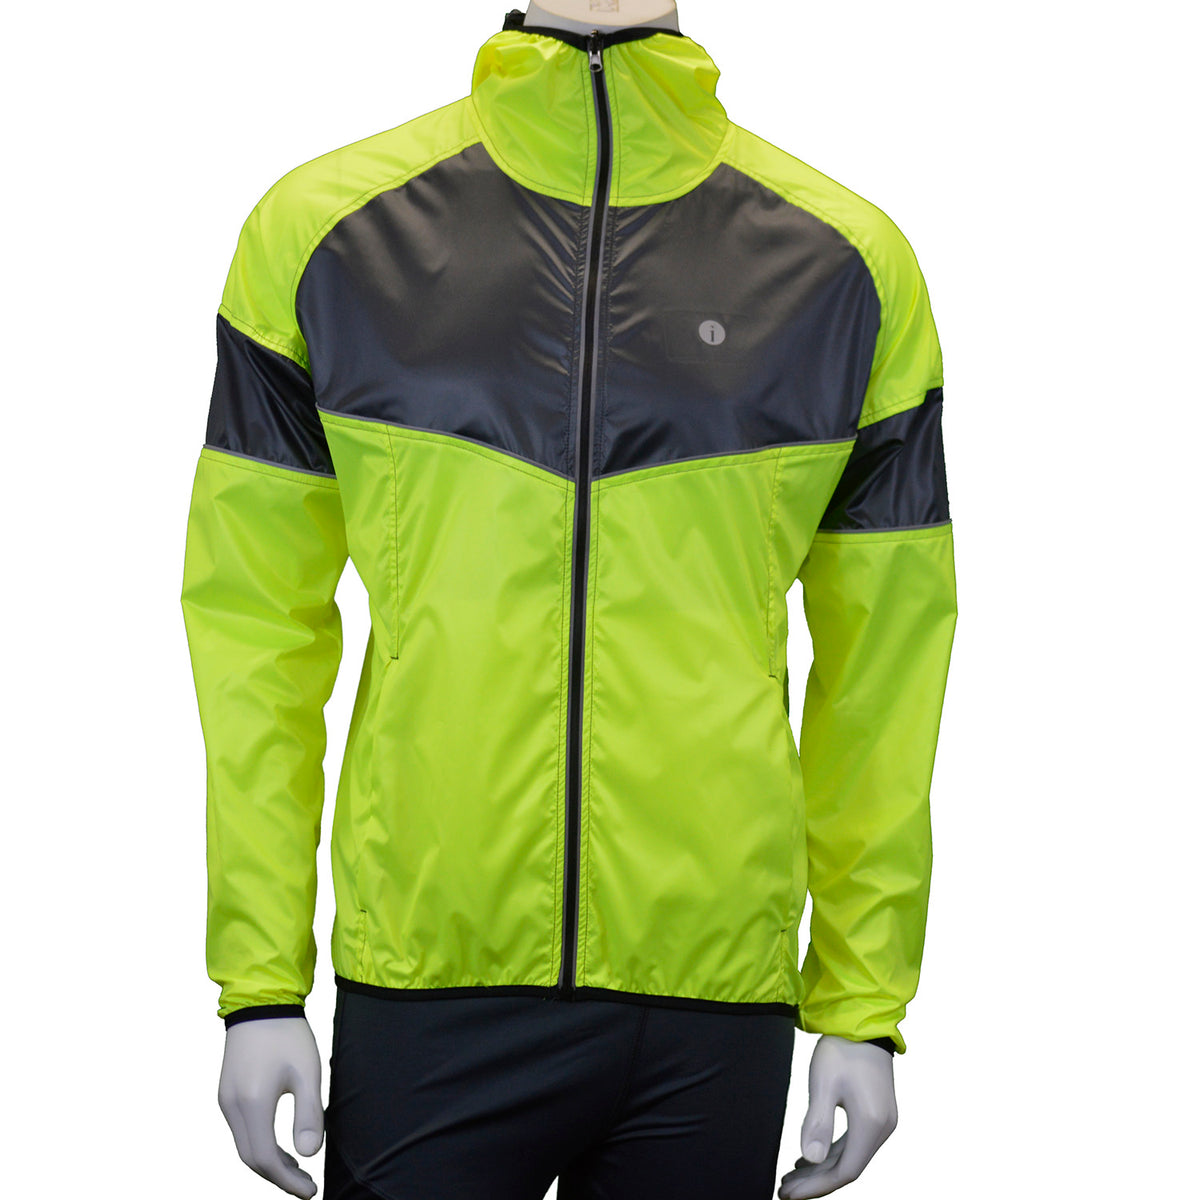 FINAL SALE: Venture Packable Men's Reflective Jacket in Flo Lime / Graphite